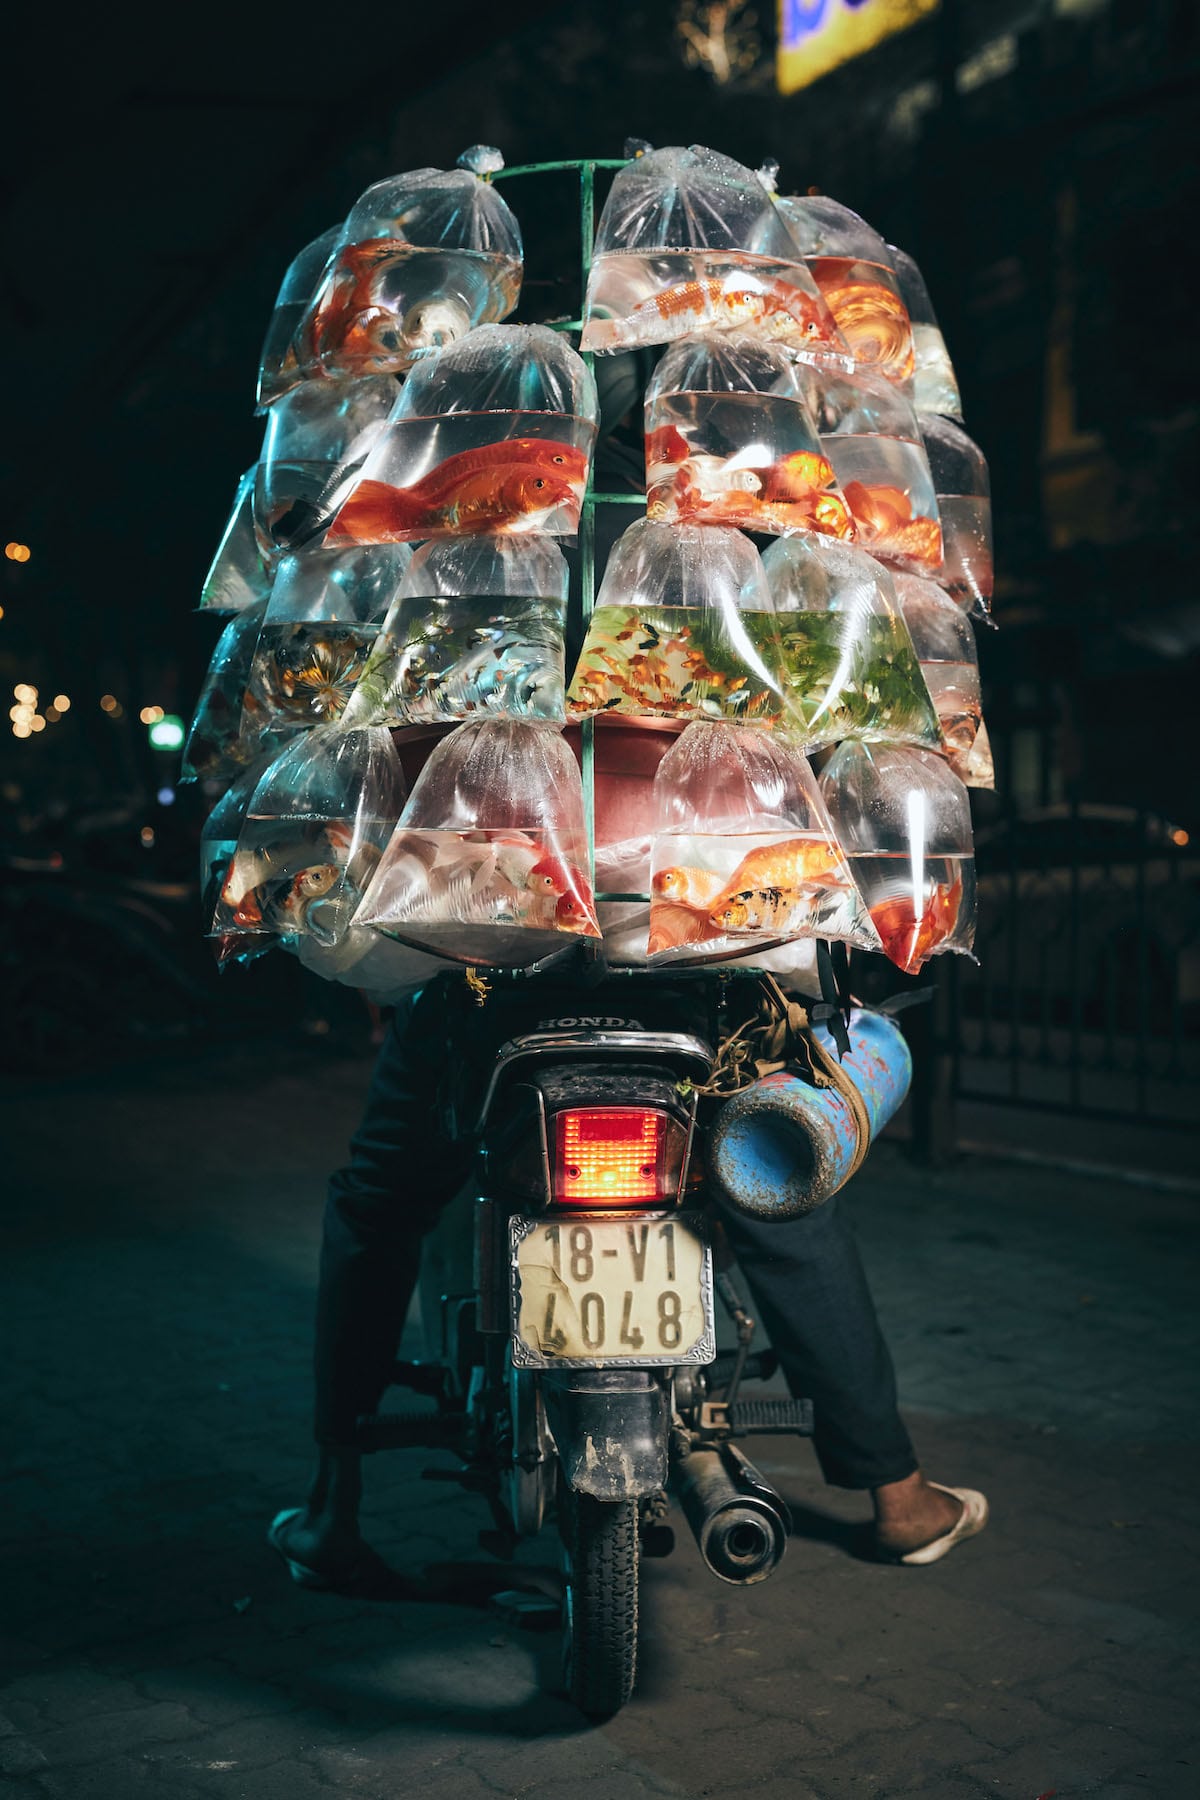 motorbikes-carry-goods-around-the-city-of-hanoi-vietnam-2019-jon-enoch